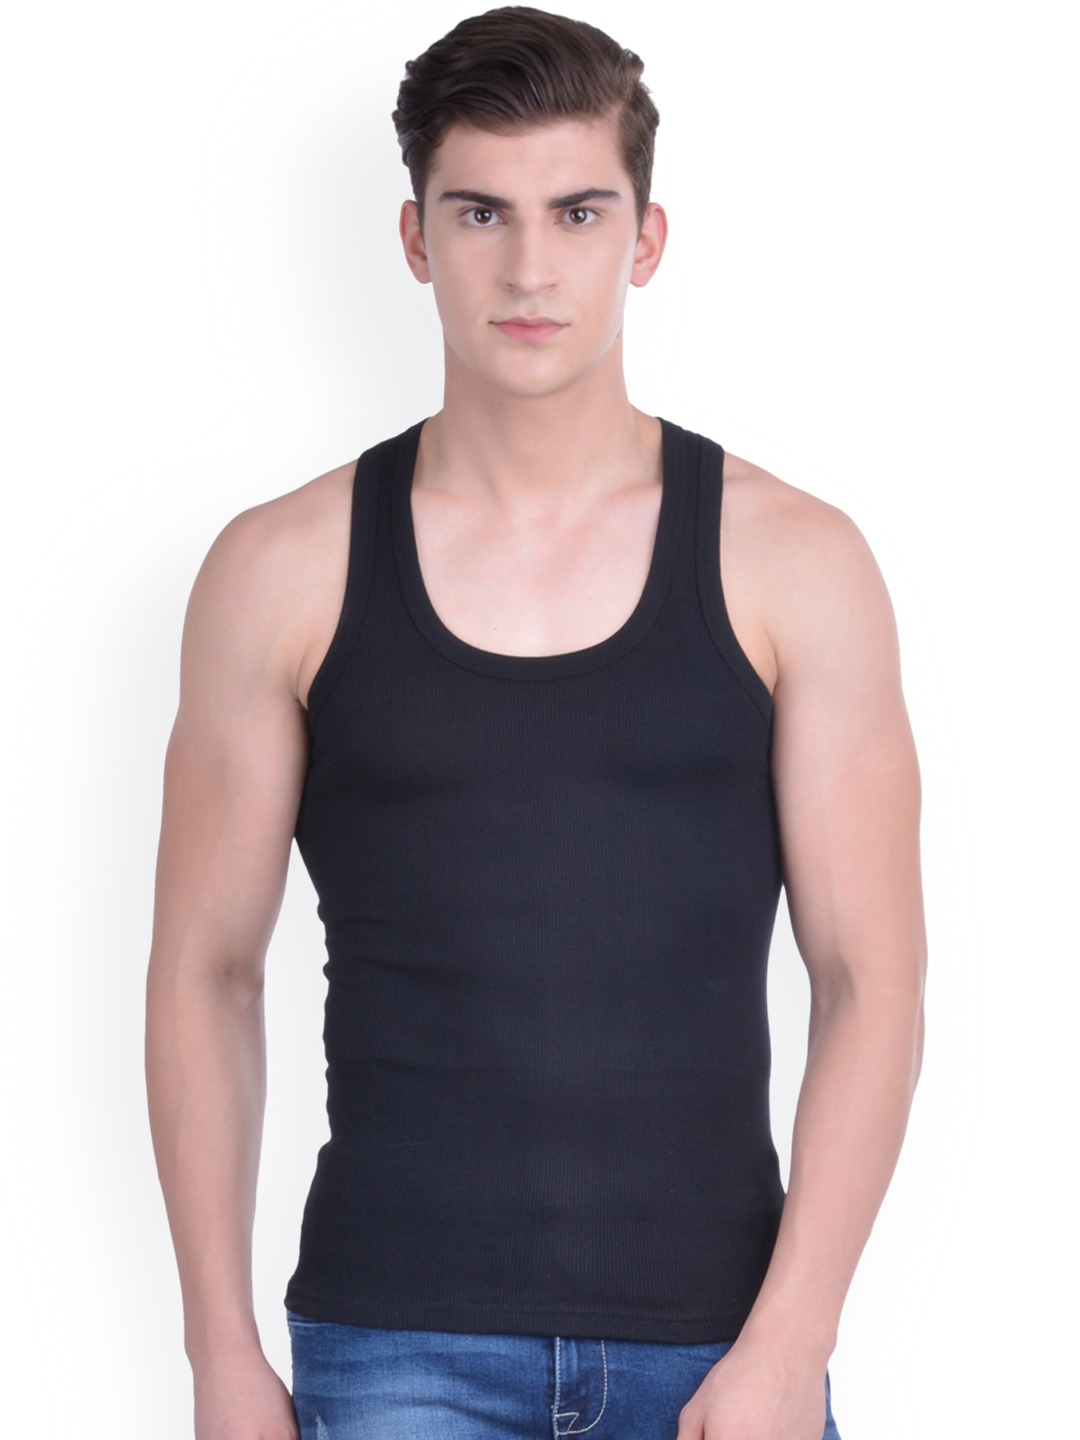 Clothing Innerwear Vests | Dollar Bigboss Pack of 2 Black Innerwear Vests MDVE-04-R1-PO2 - SF33560